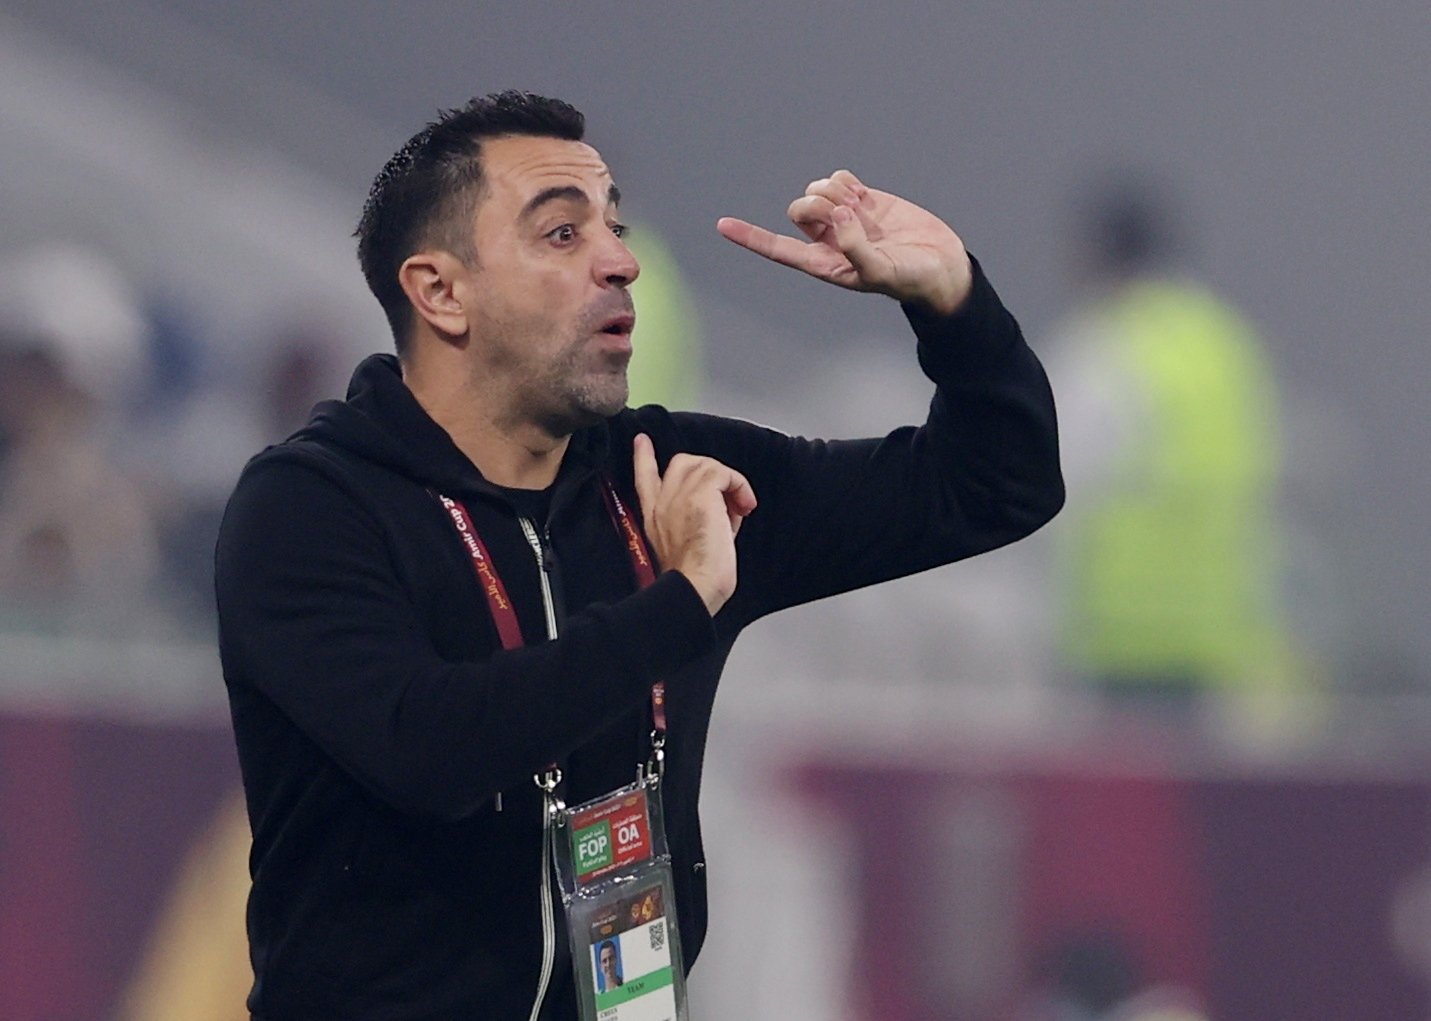 Al Sadd coach Xavi Hernandez reacts during the Emir Cup final against Al Rayyan in Al Thumama, Qatar, Oct. 22, 2021. (Reuters Photo)